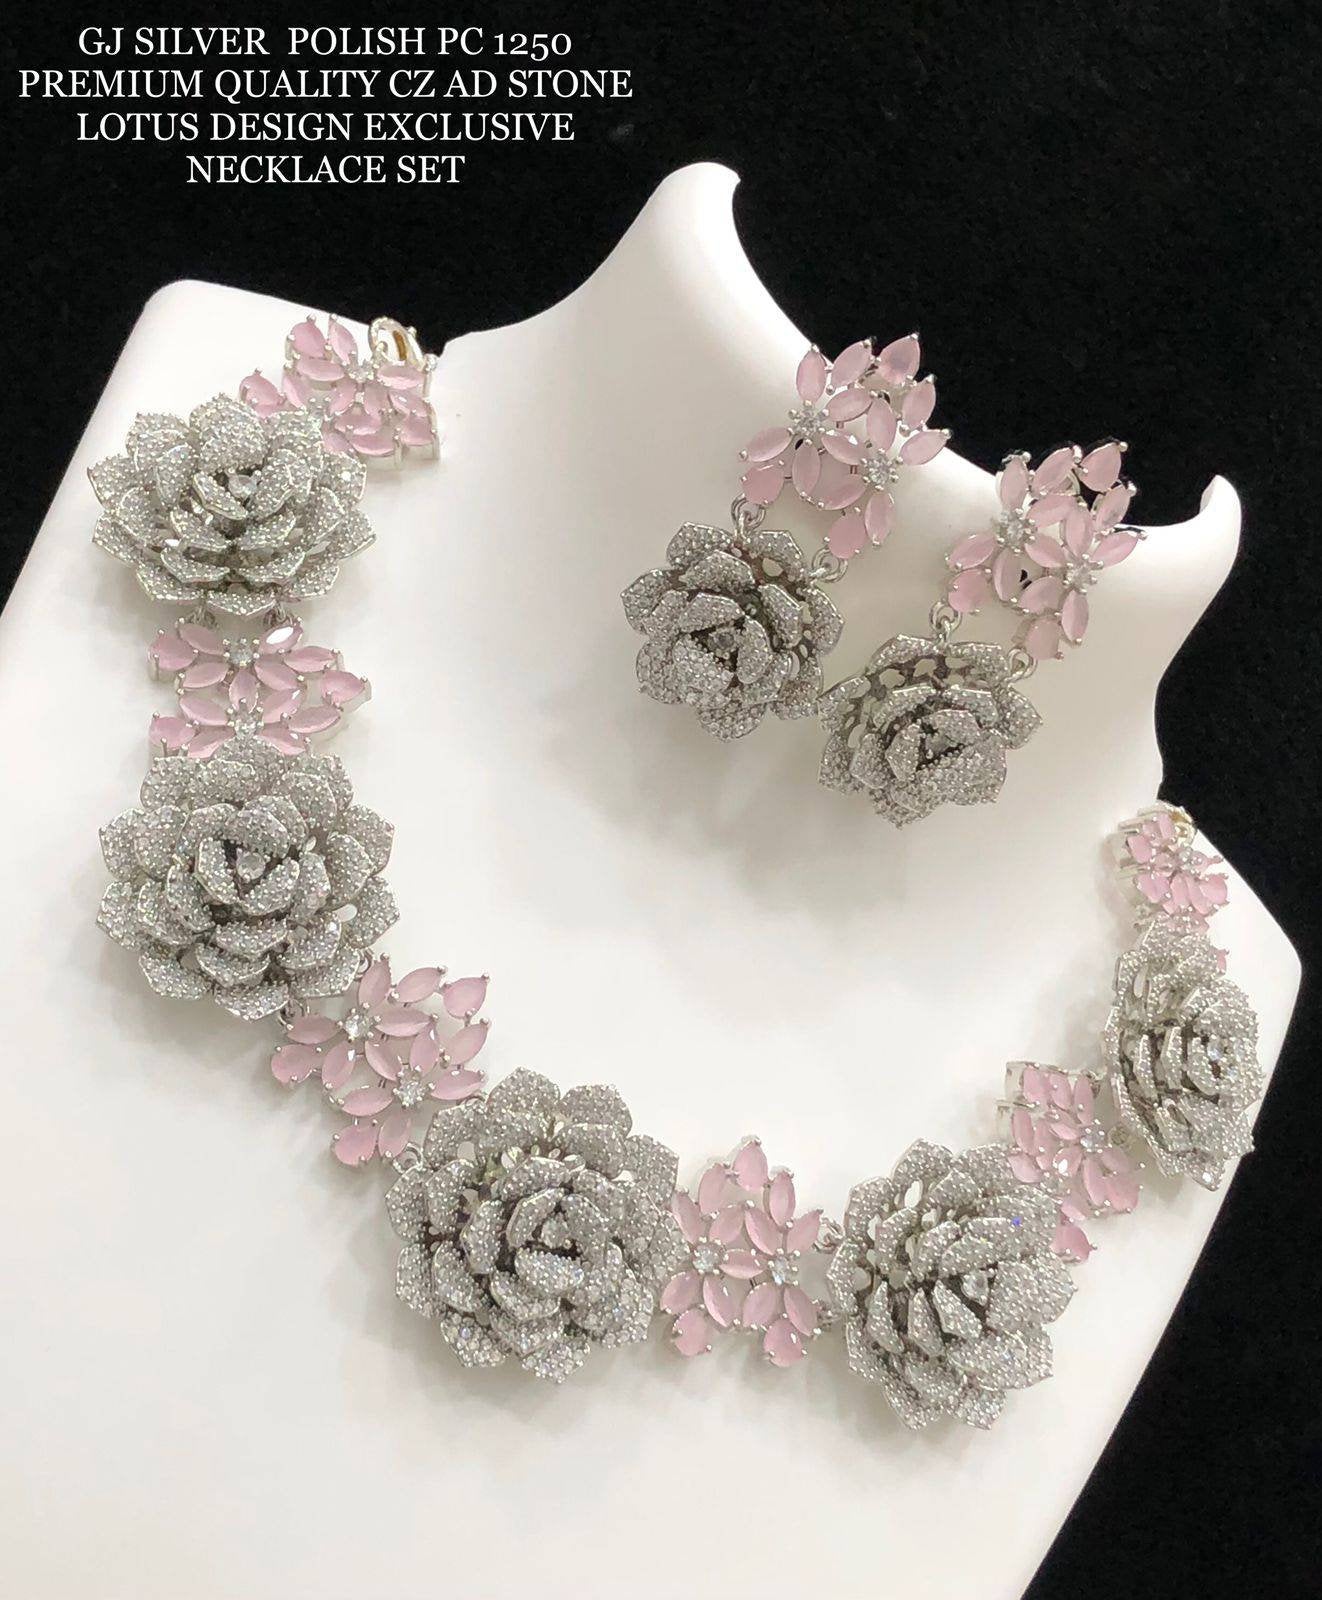 Rose gold polish Premium quality cz AD stone Lotus design Exclusive necklace set, Designer Indian temple jewellery